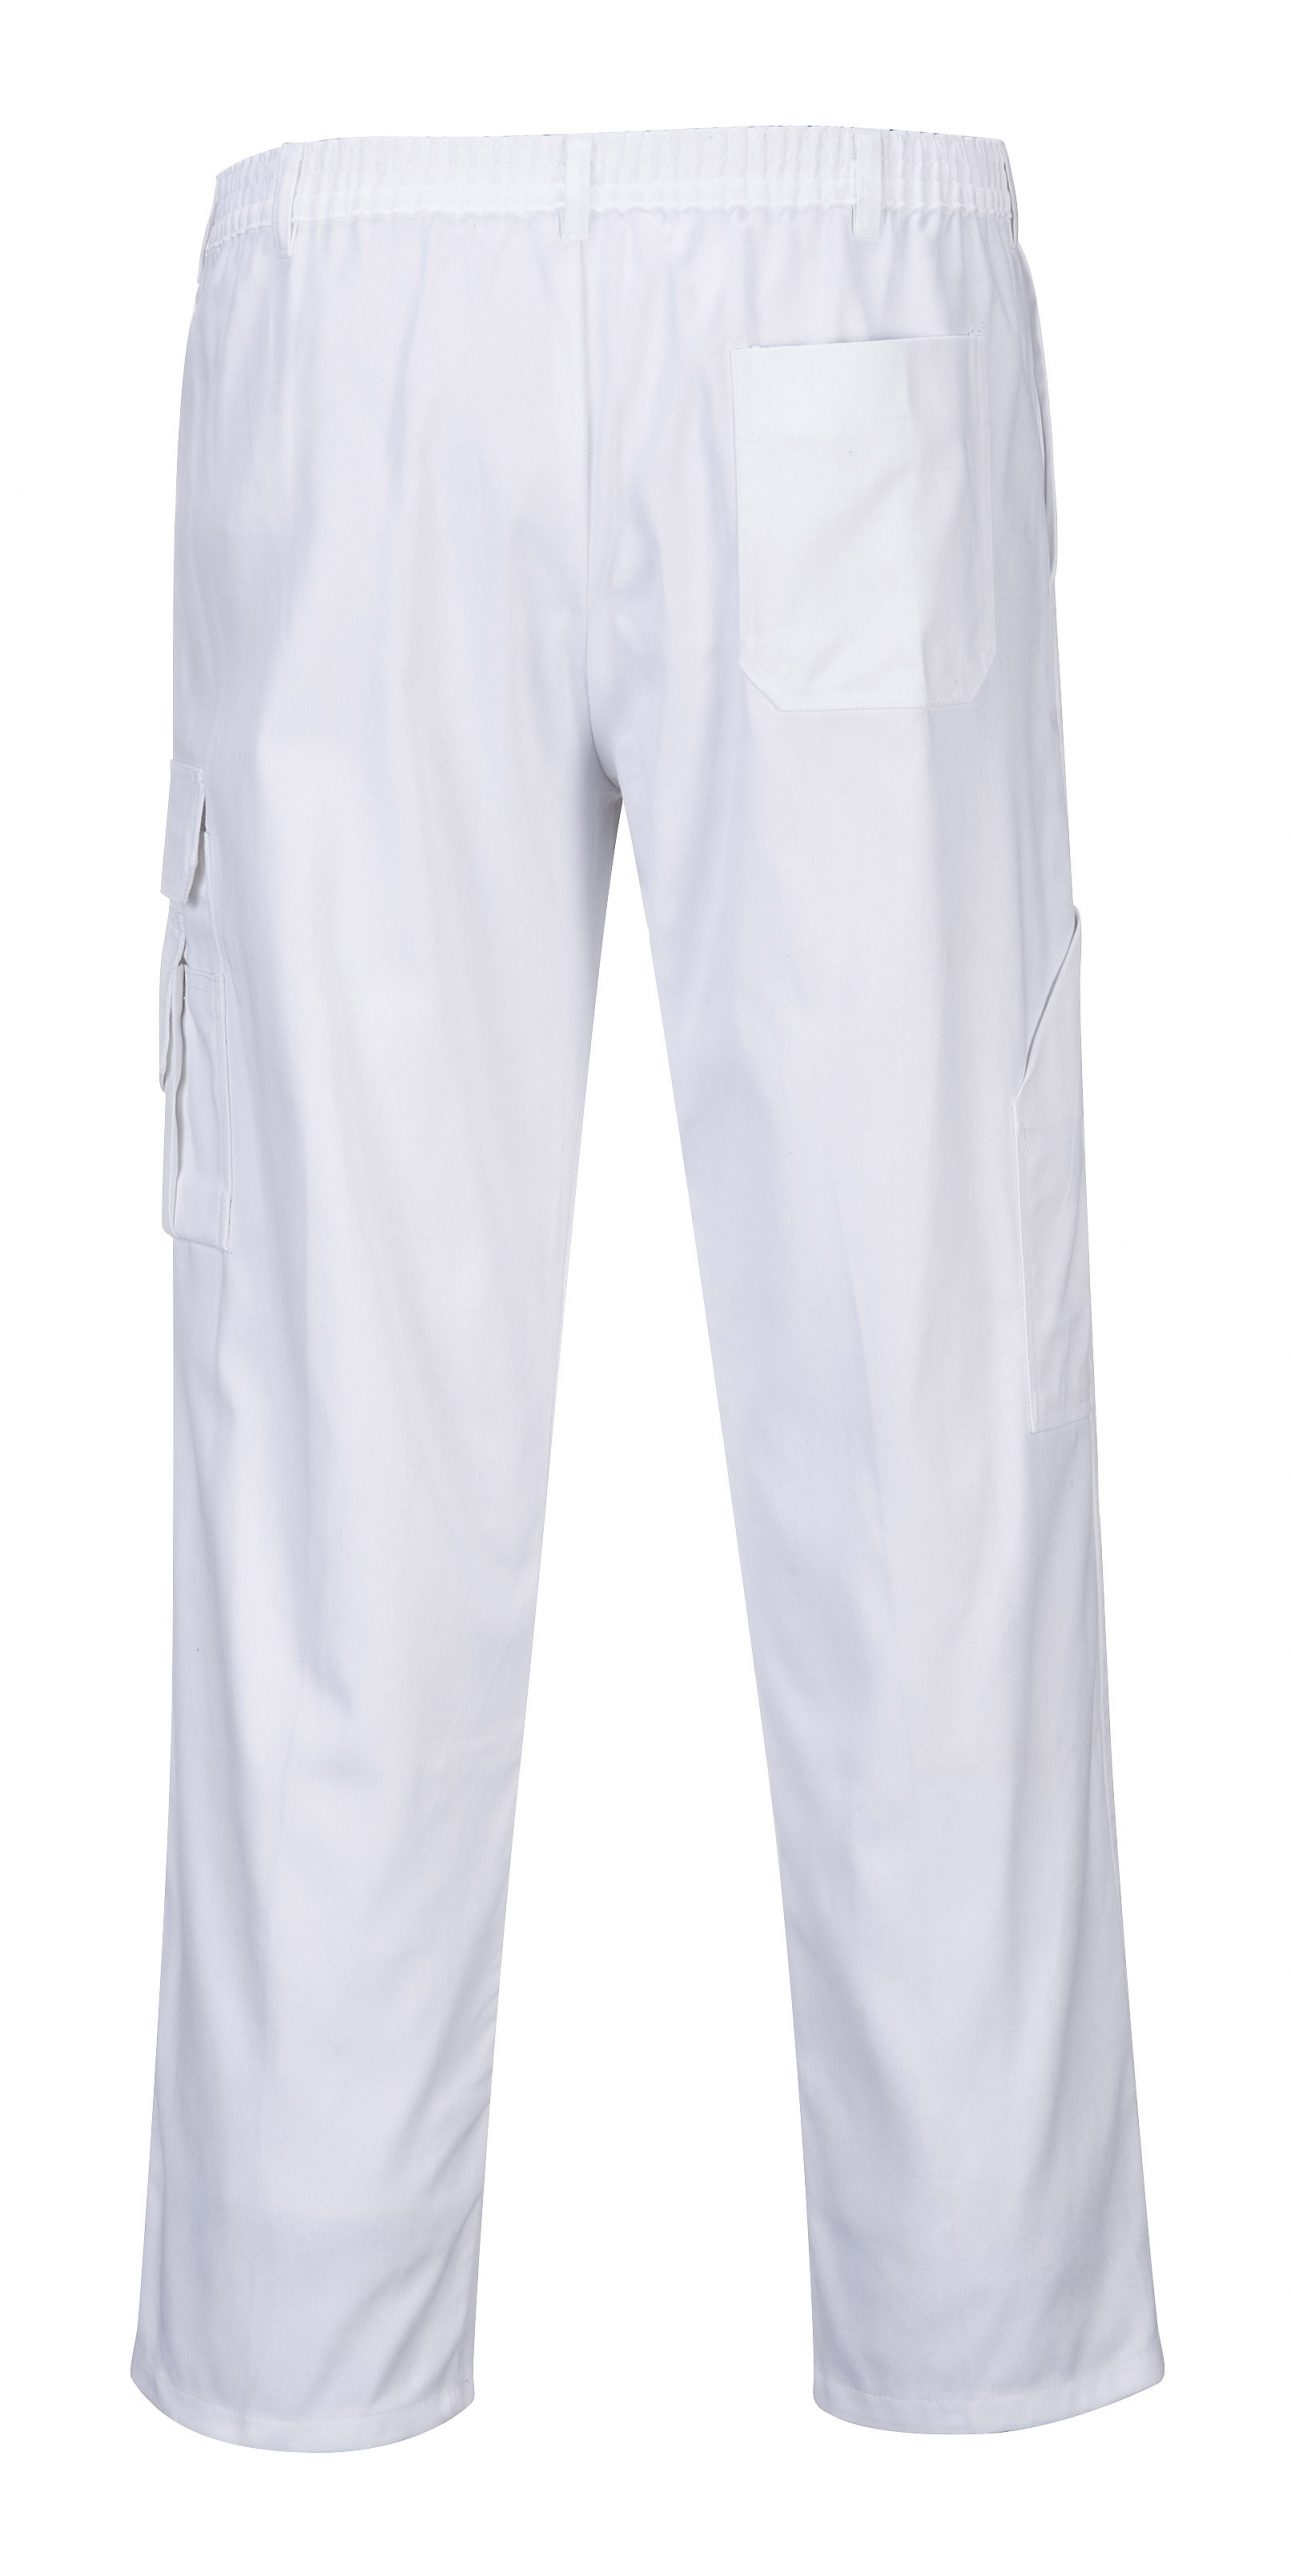 Portwest S817 – Peintres Pantalons blanc 4XL